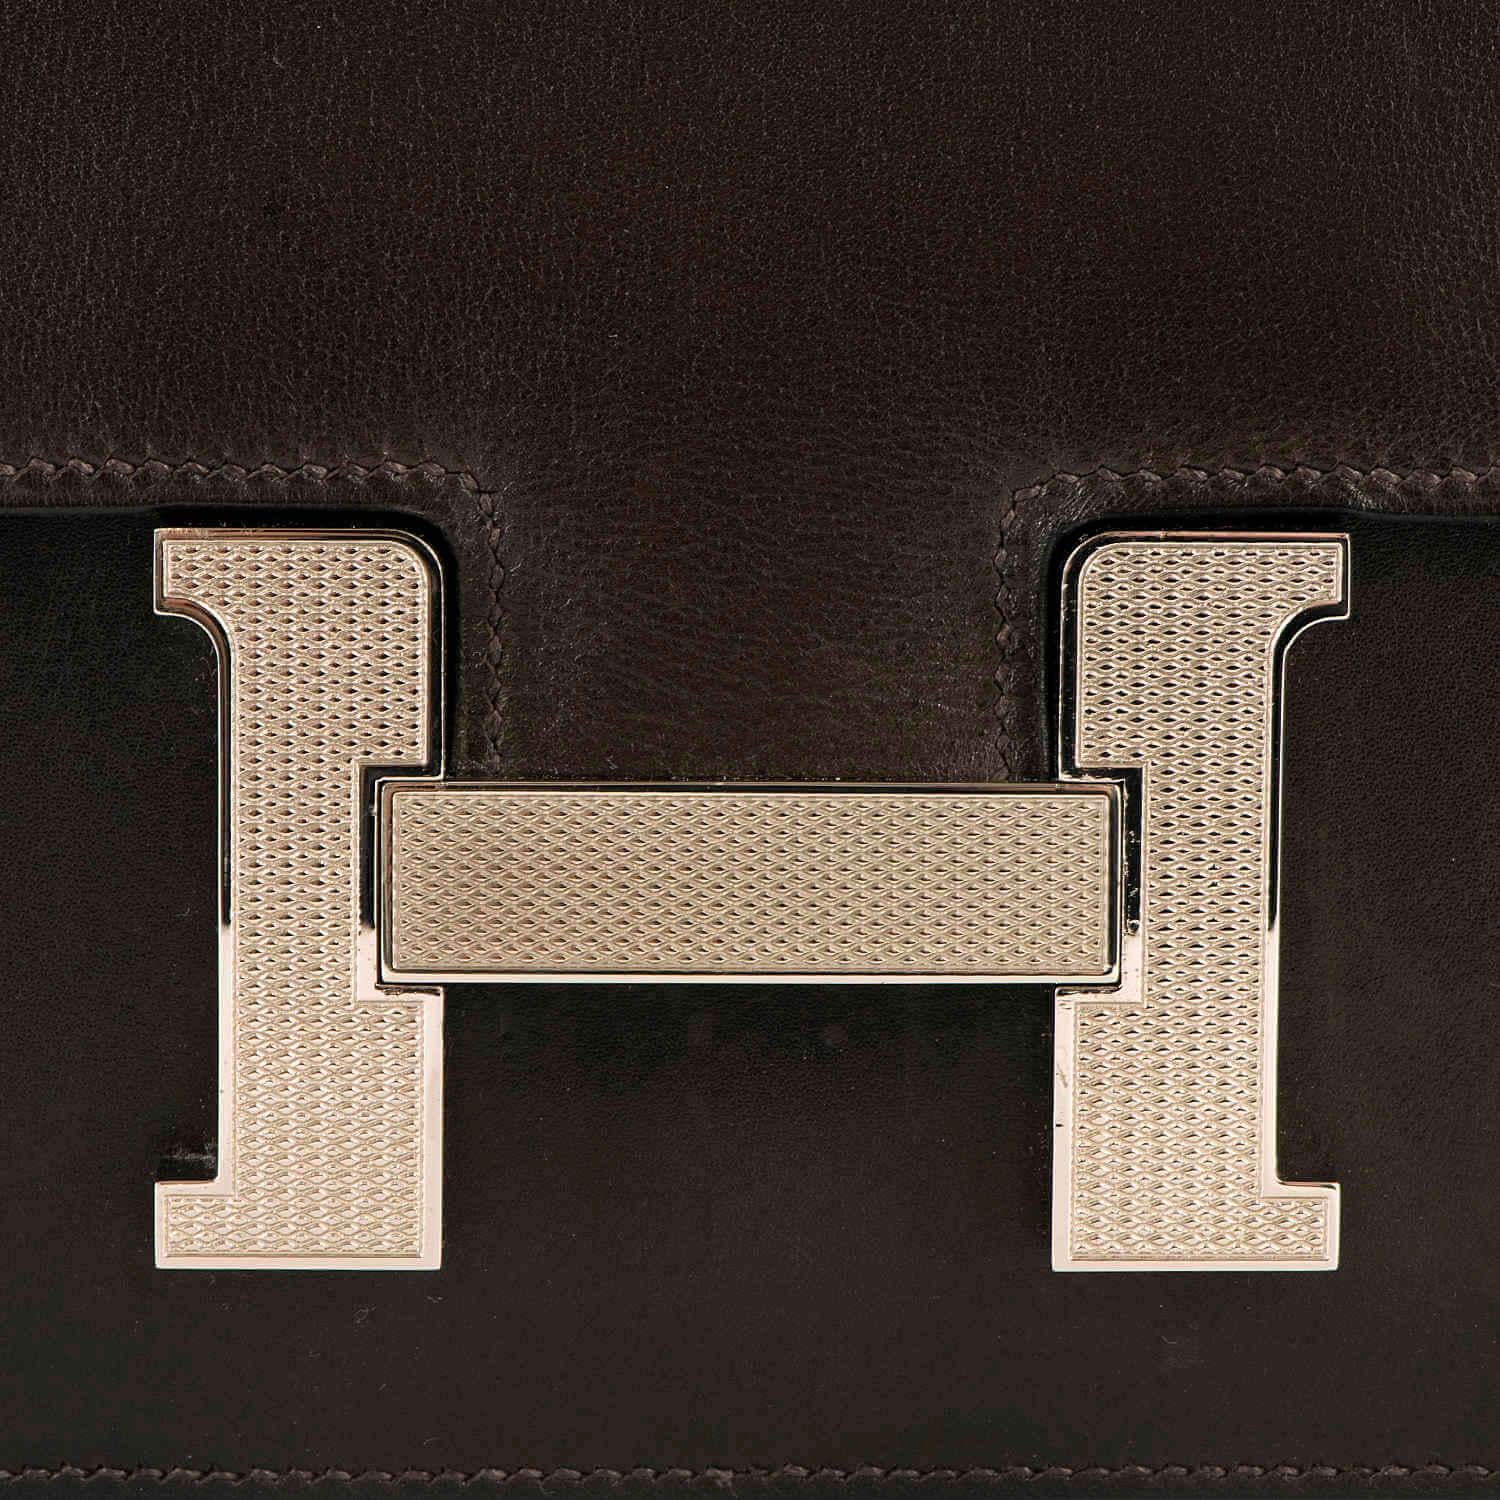 Tres Chic Limited Edition Hermes 23cm Ebene Box Leather Constance Shoulder Bag (Schwarz)